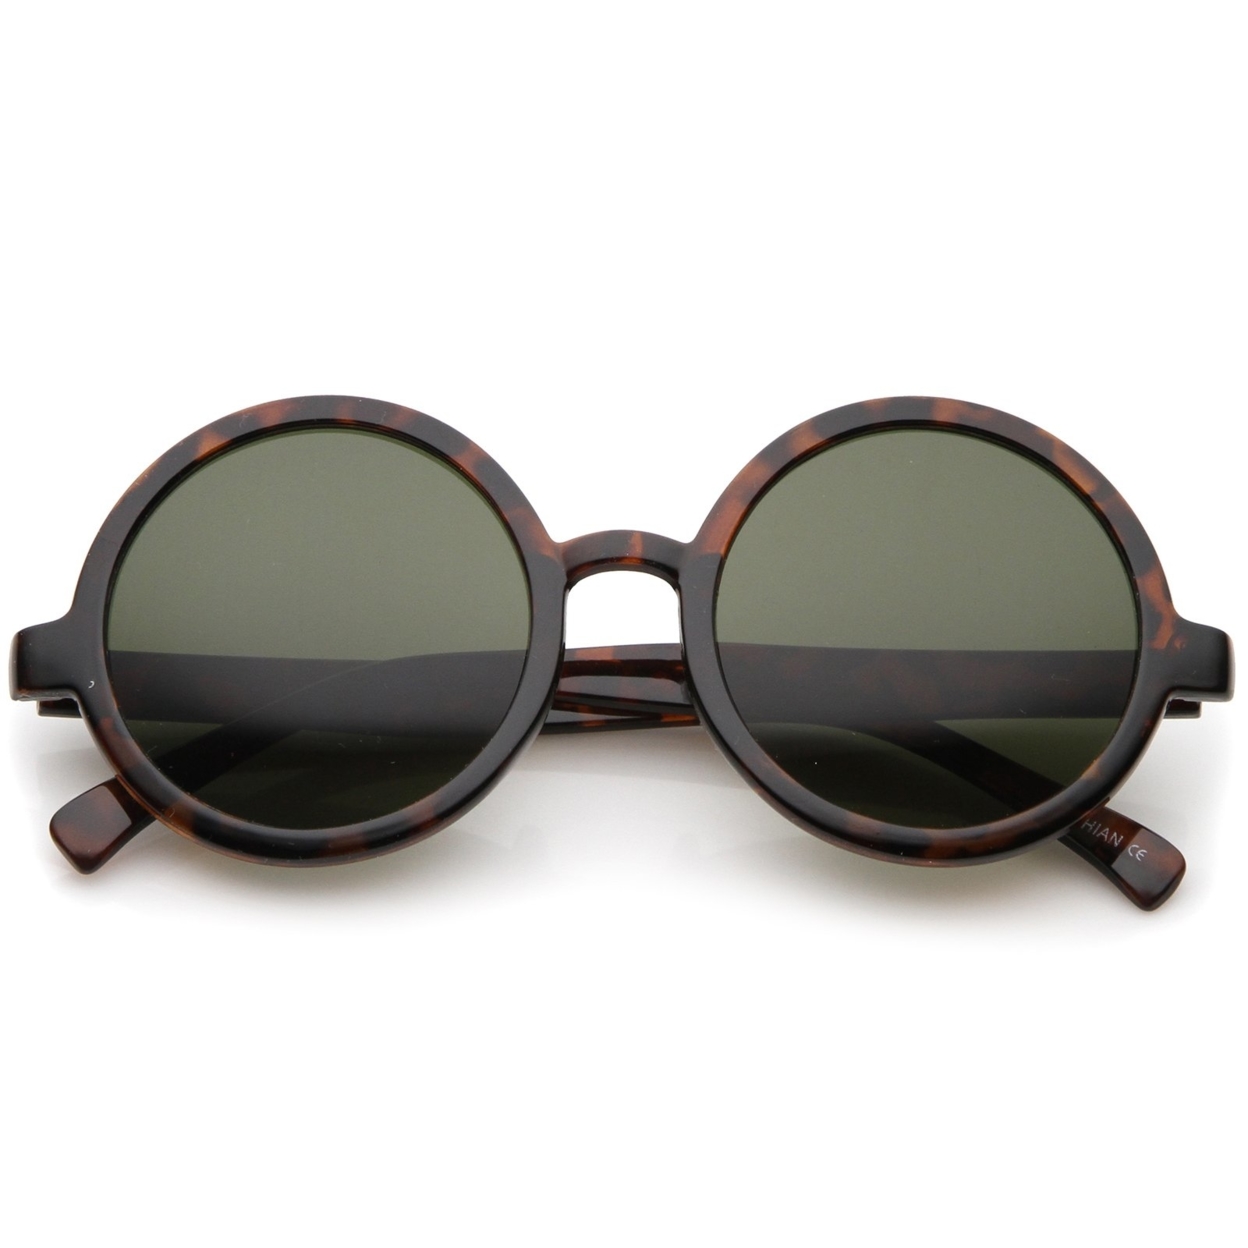 Classic Retro Horn Rimmed Neutral-Colored Lens Round Sunglasses 52mm - Matte Black / Lavender